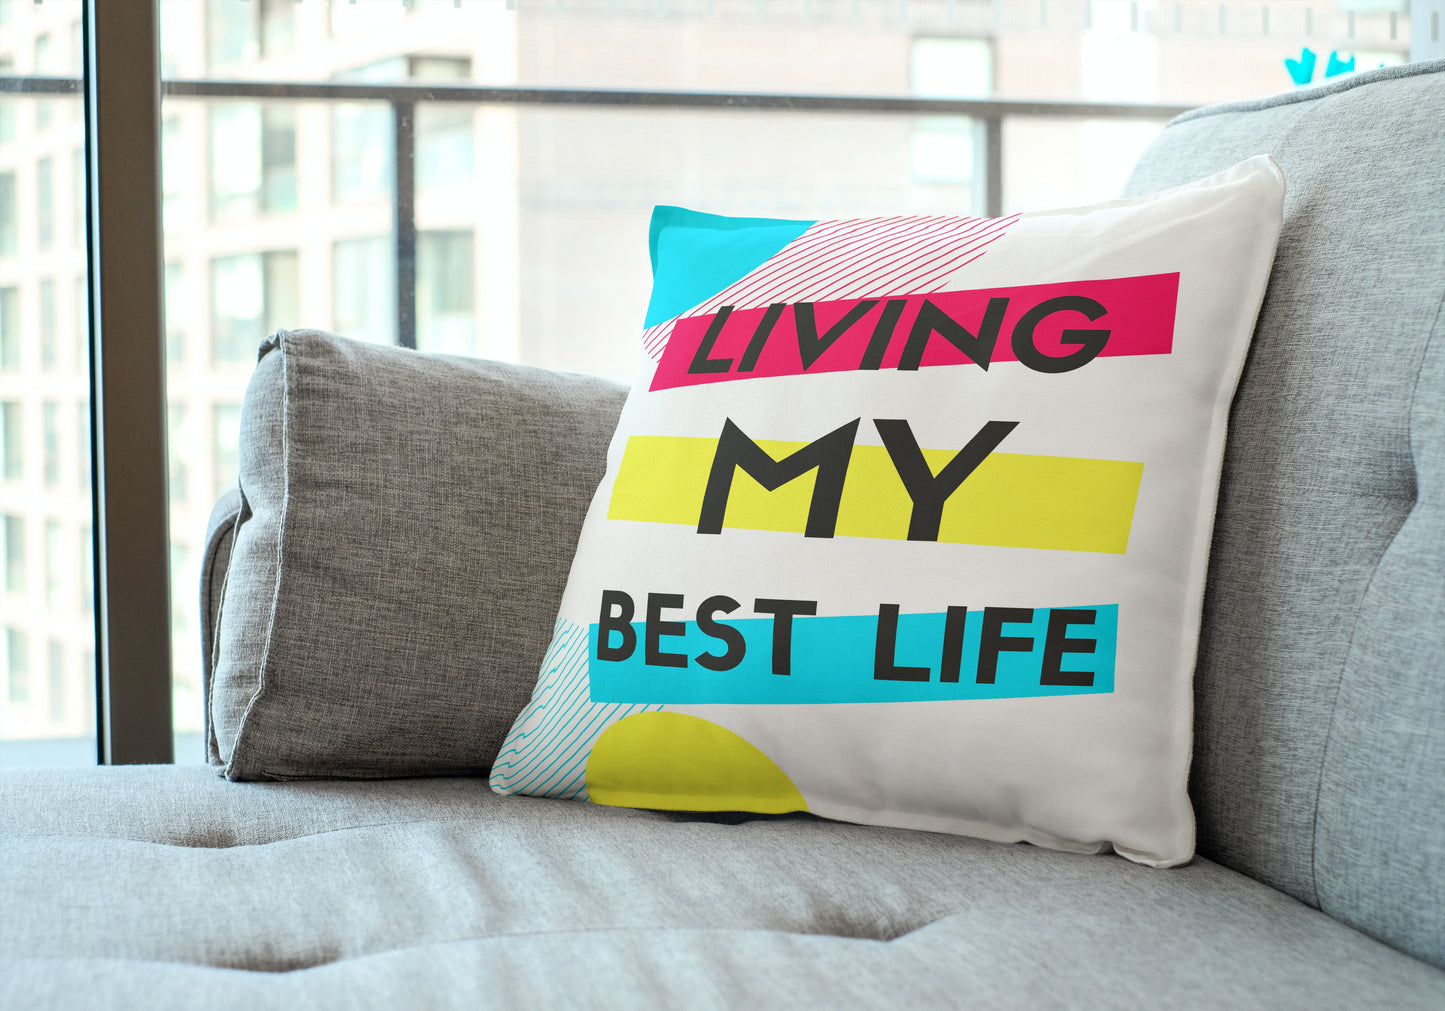 Living My Best Life Throw Pillow